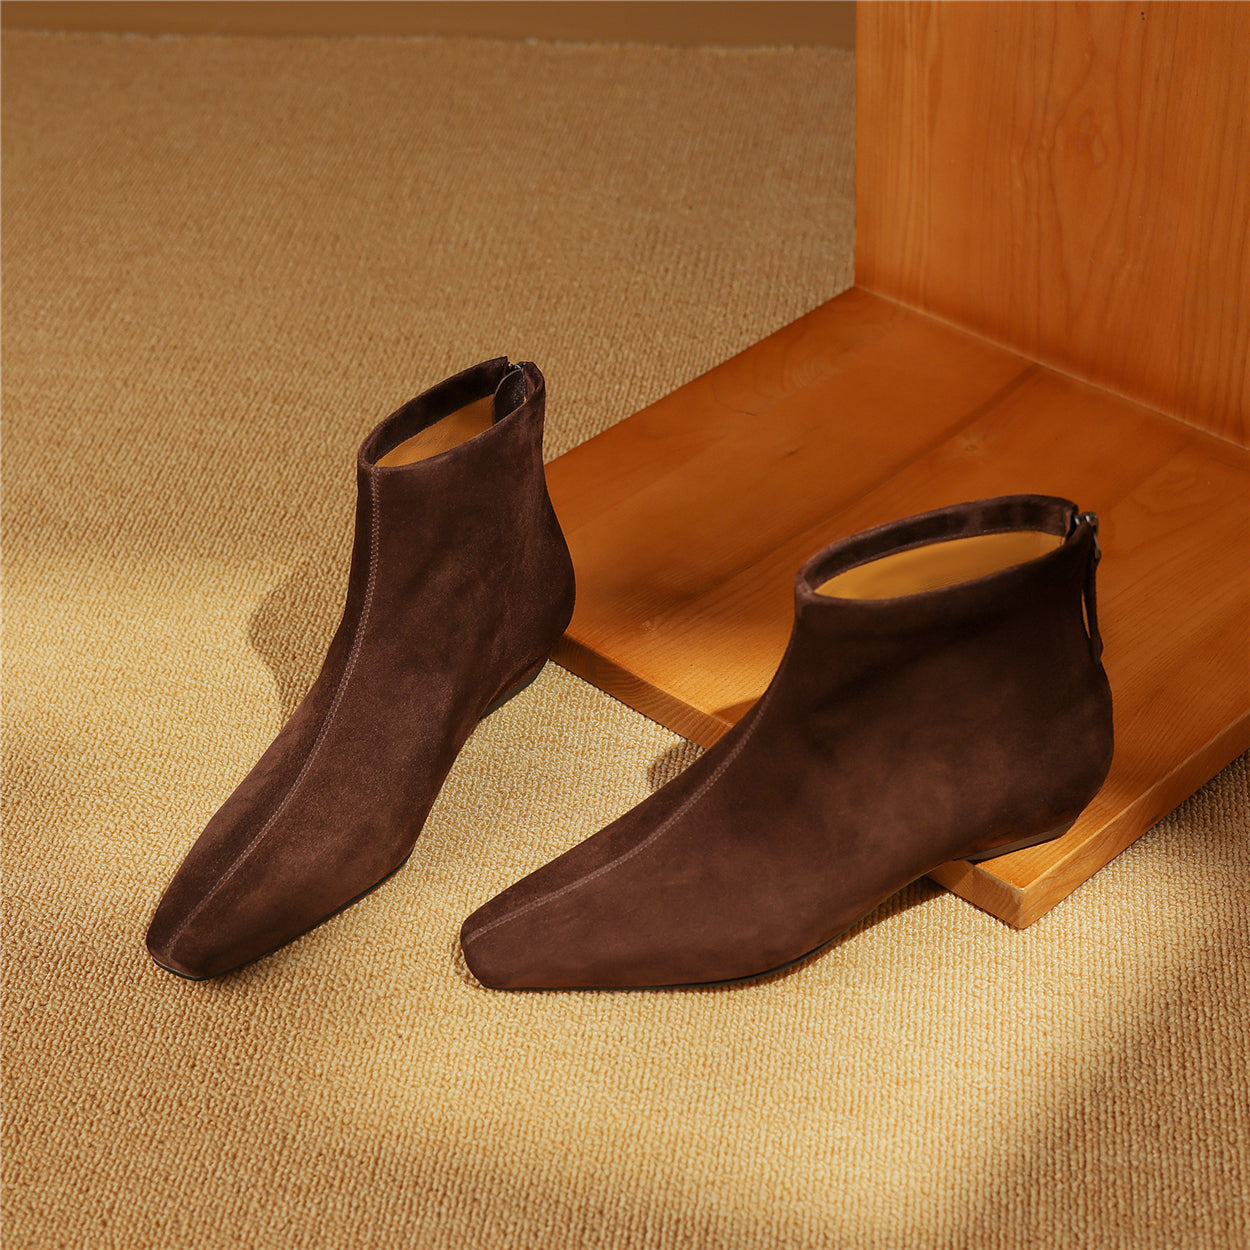 TinaCus Suede Leather Handmade Women's Low Heel Zip Up Ankle Boots